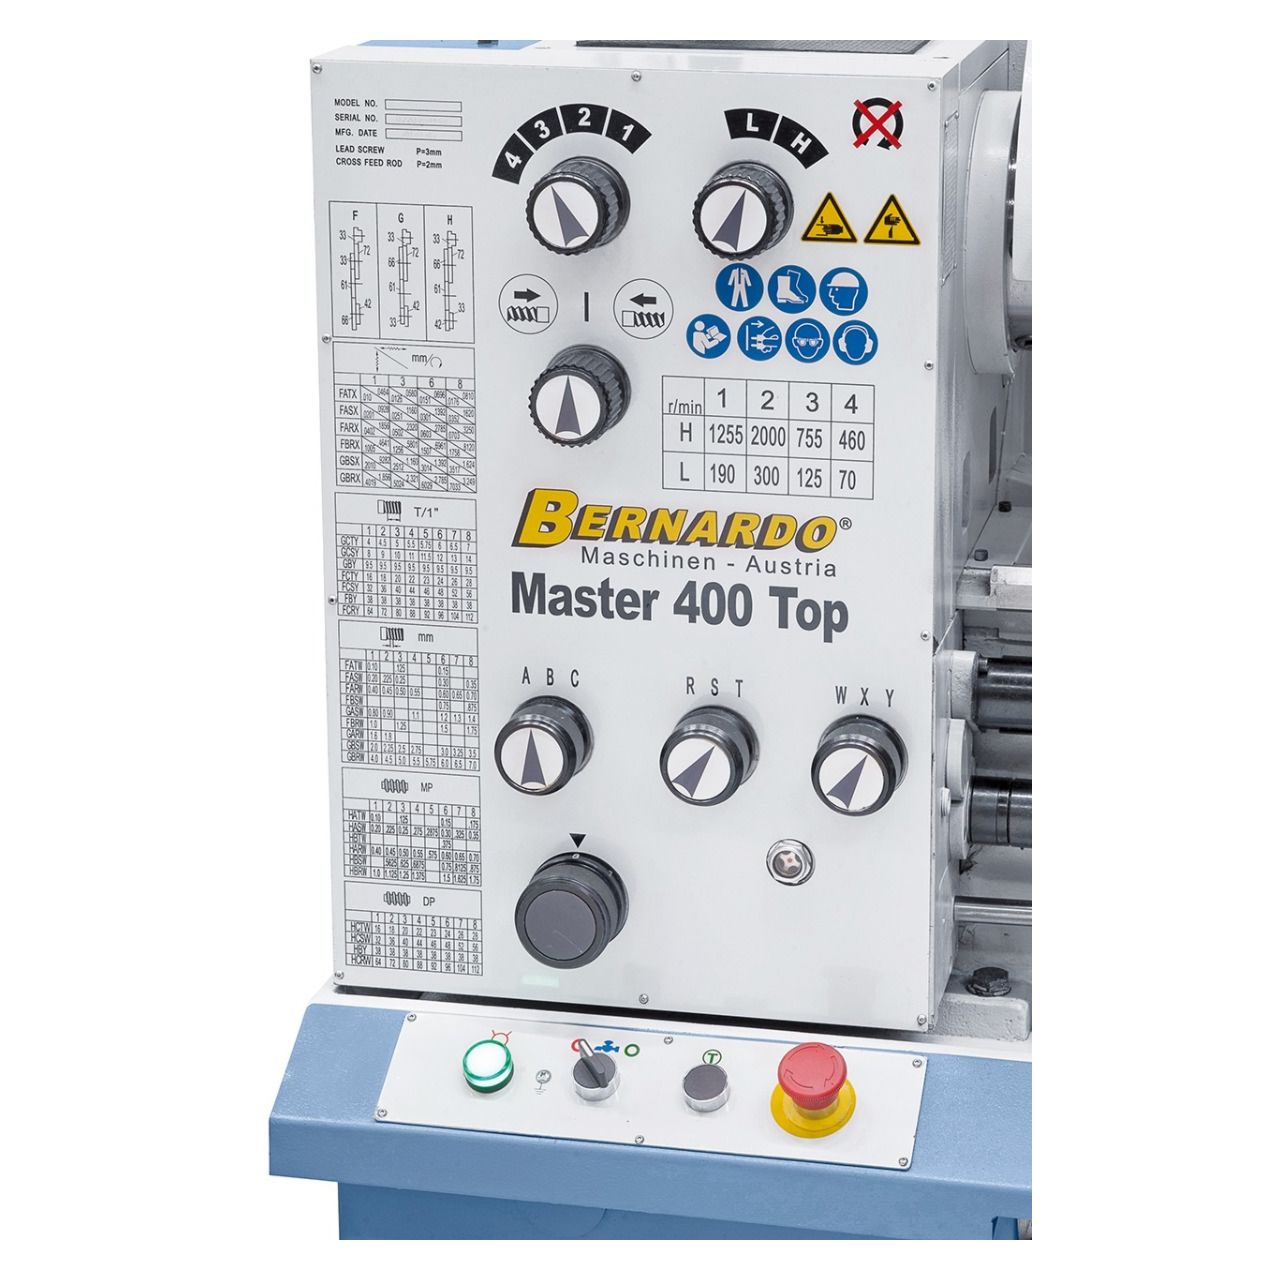 Universal-Drehmaschine Master 400 Top inkl. 3-Achs-Digitalanzeige, Bernardo